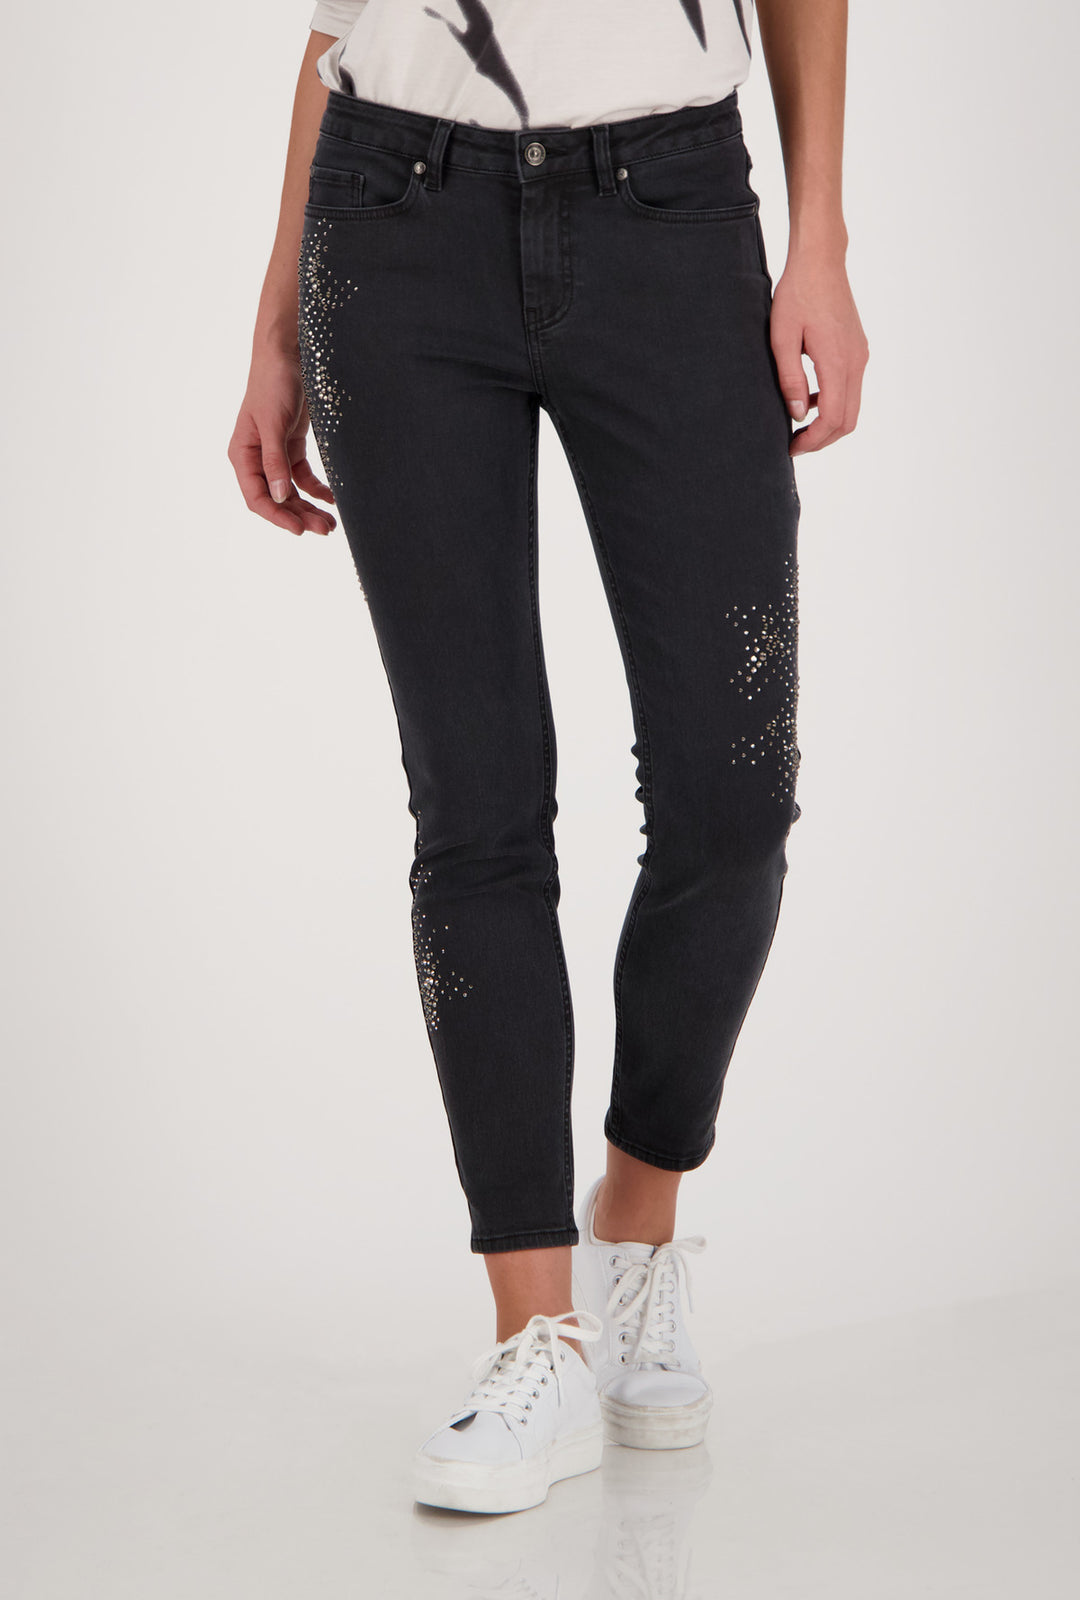 Monari 405892 Dark Grey Skinny Jeans with Rhinestones Front Model | Dotique